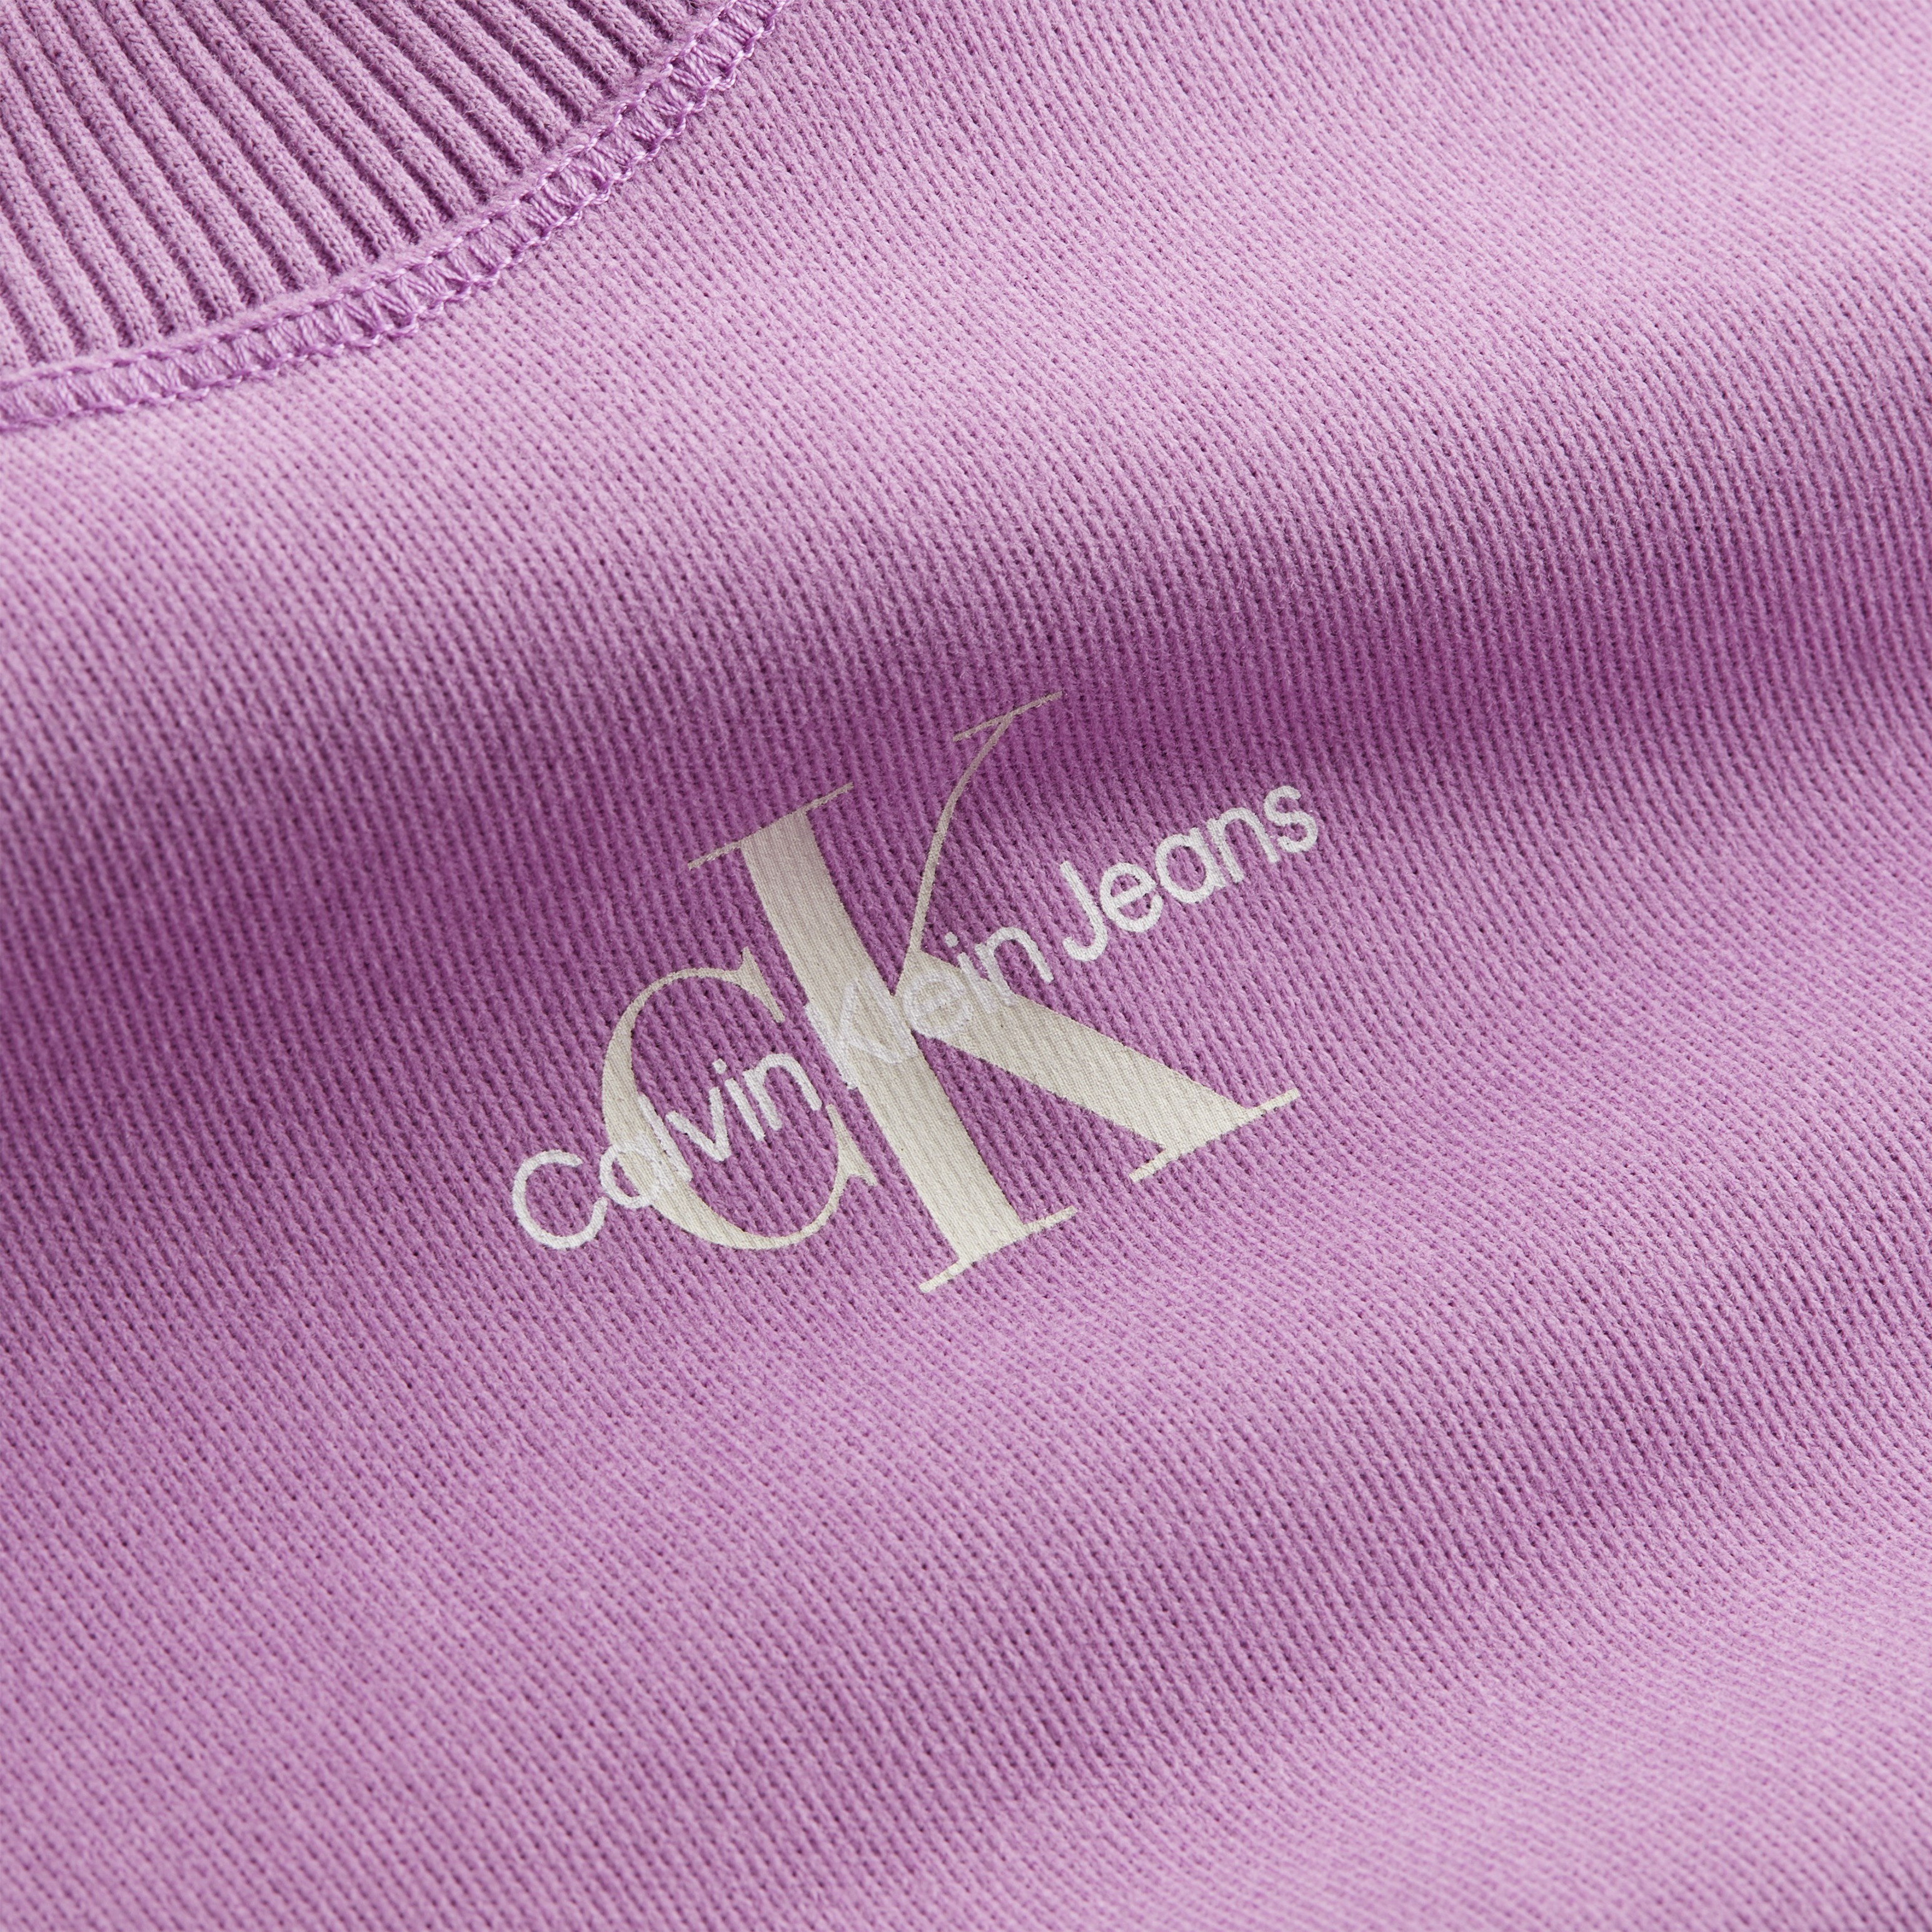 Calvin Klein Jeans - Cotton sweatshirt with logo, Purple, large image number 2